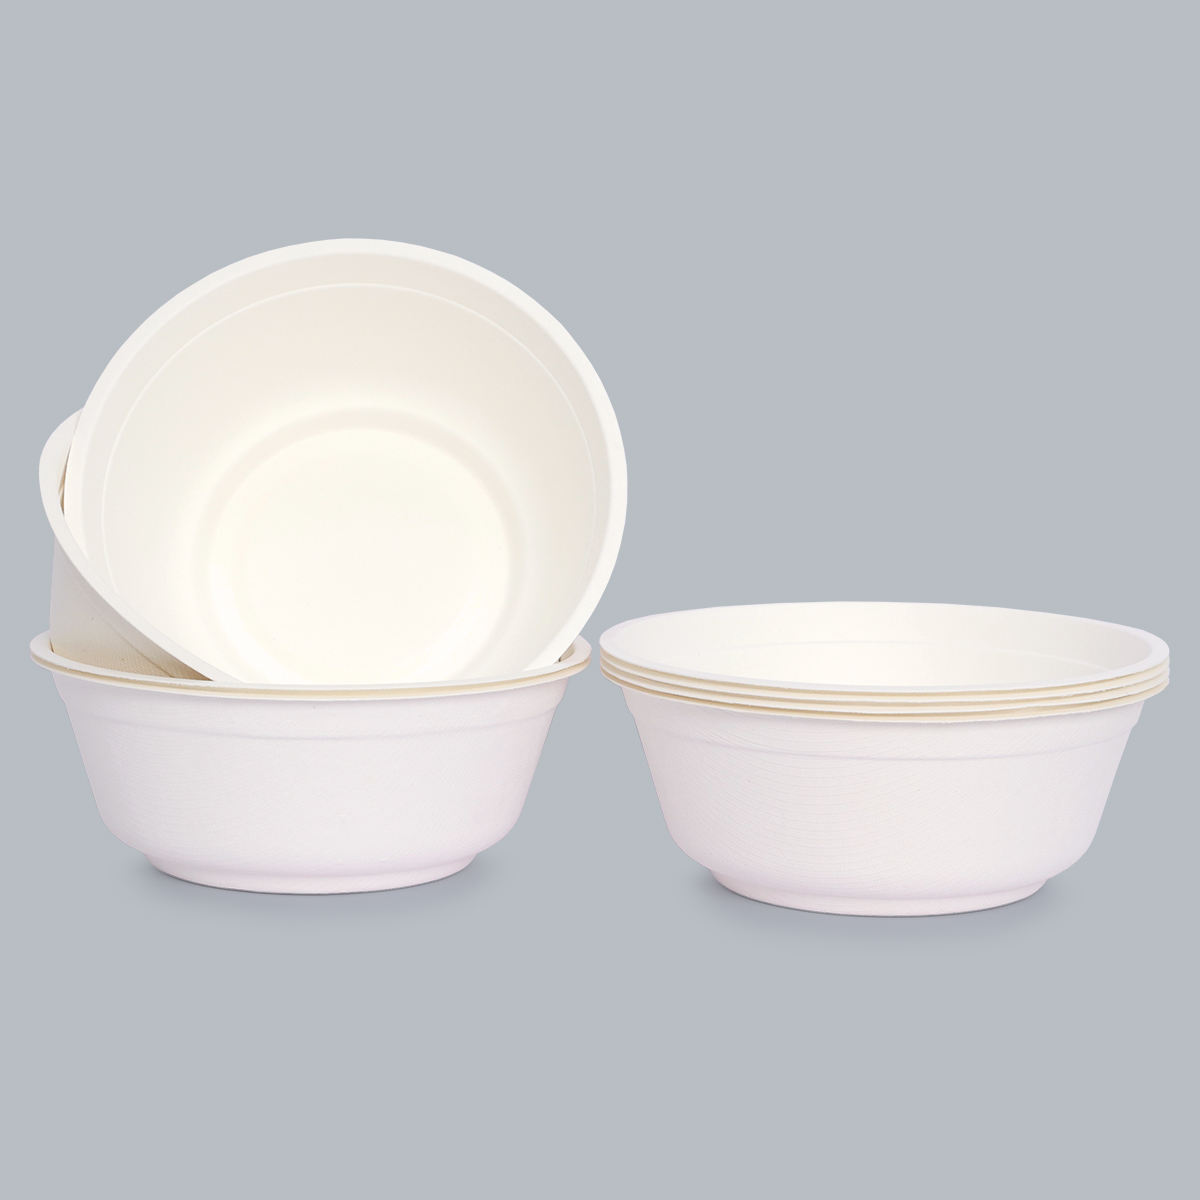 High-end bowls Eco-friendly bowls Biodegradable bowls